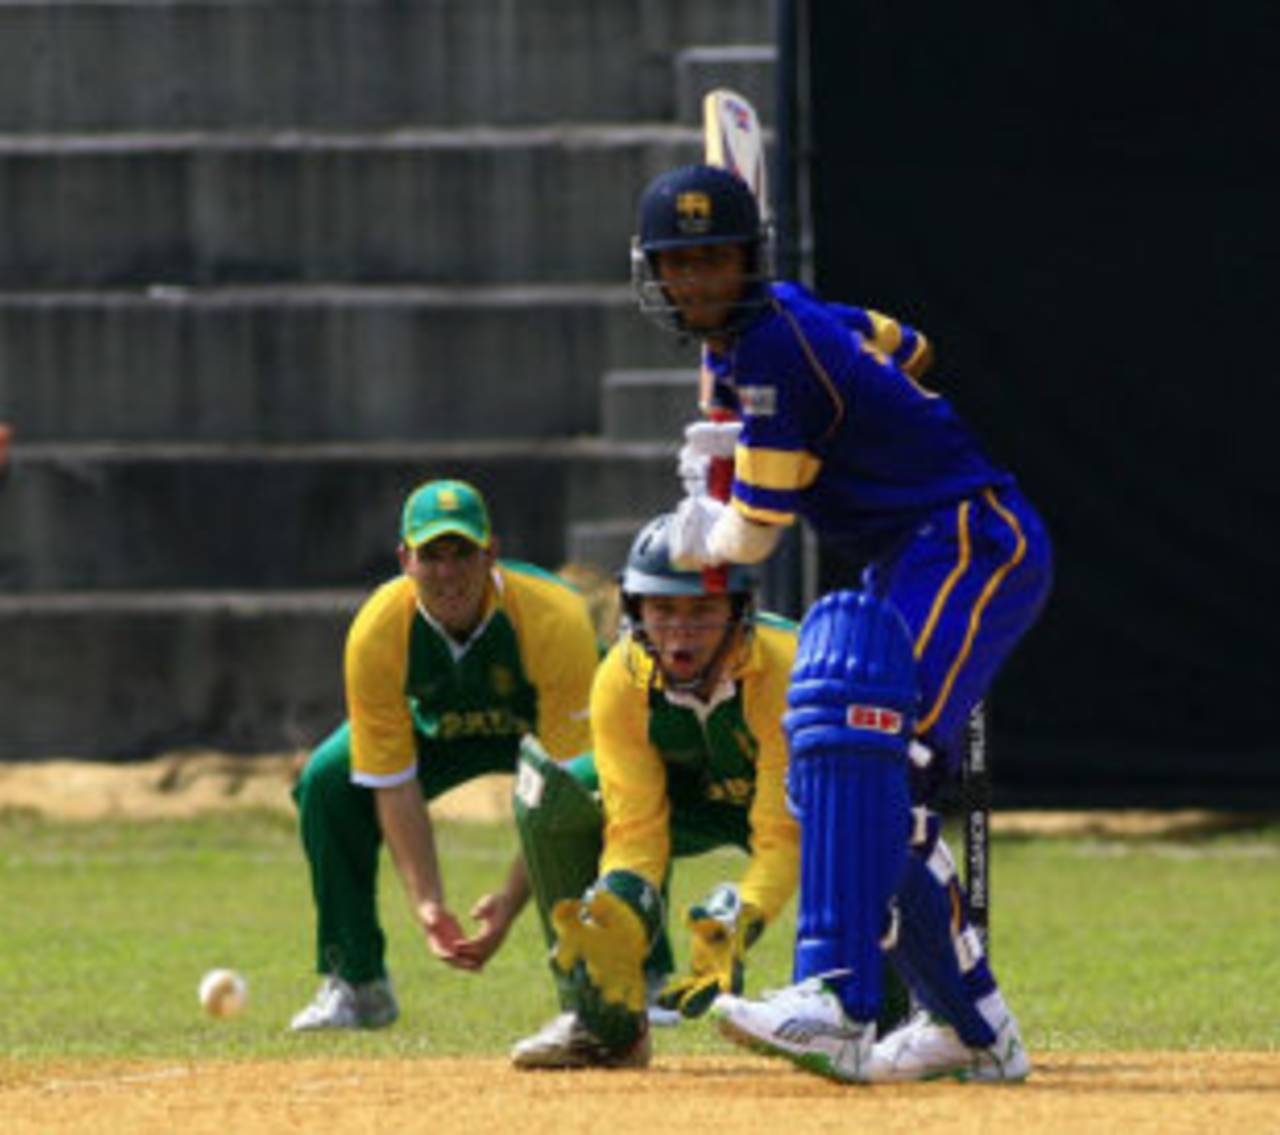 The promising Dinesh Chandimal joins the senior team as the backup wicketkeeper&nbsp;&nbsp;&bull;&nbsp;&nbsp;International Cricket Council